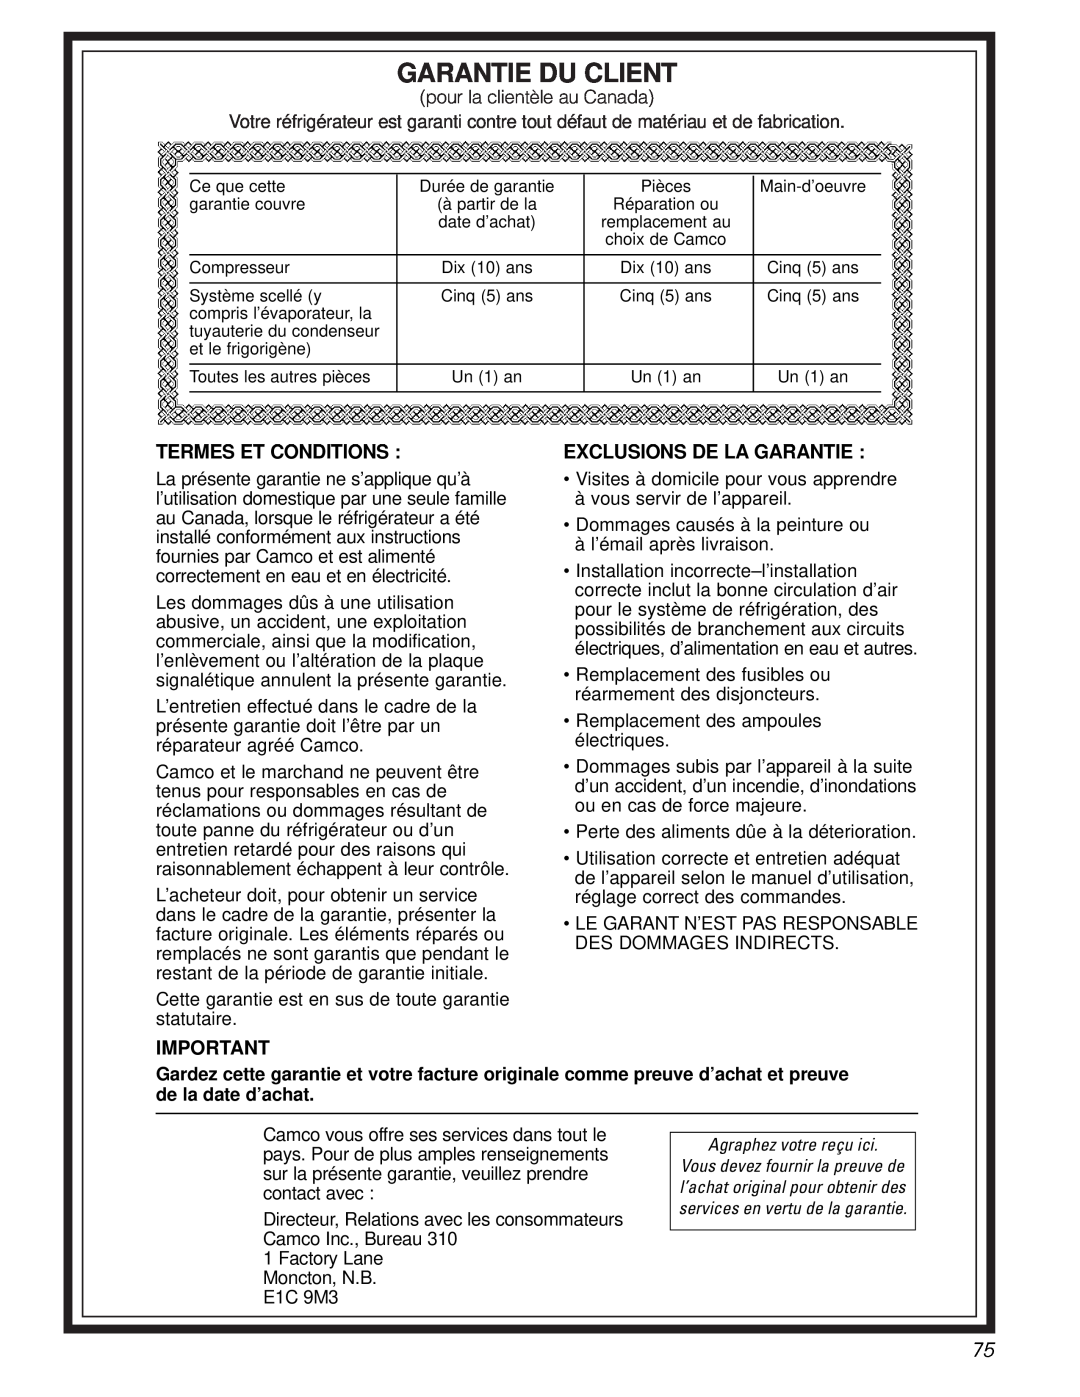 GE installation instructions Garantie Du Client, Termes Et Conditions, Exclusions De La Garantie 